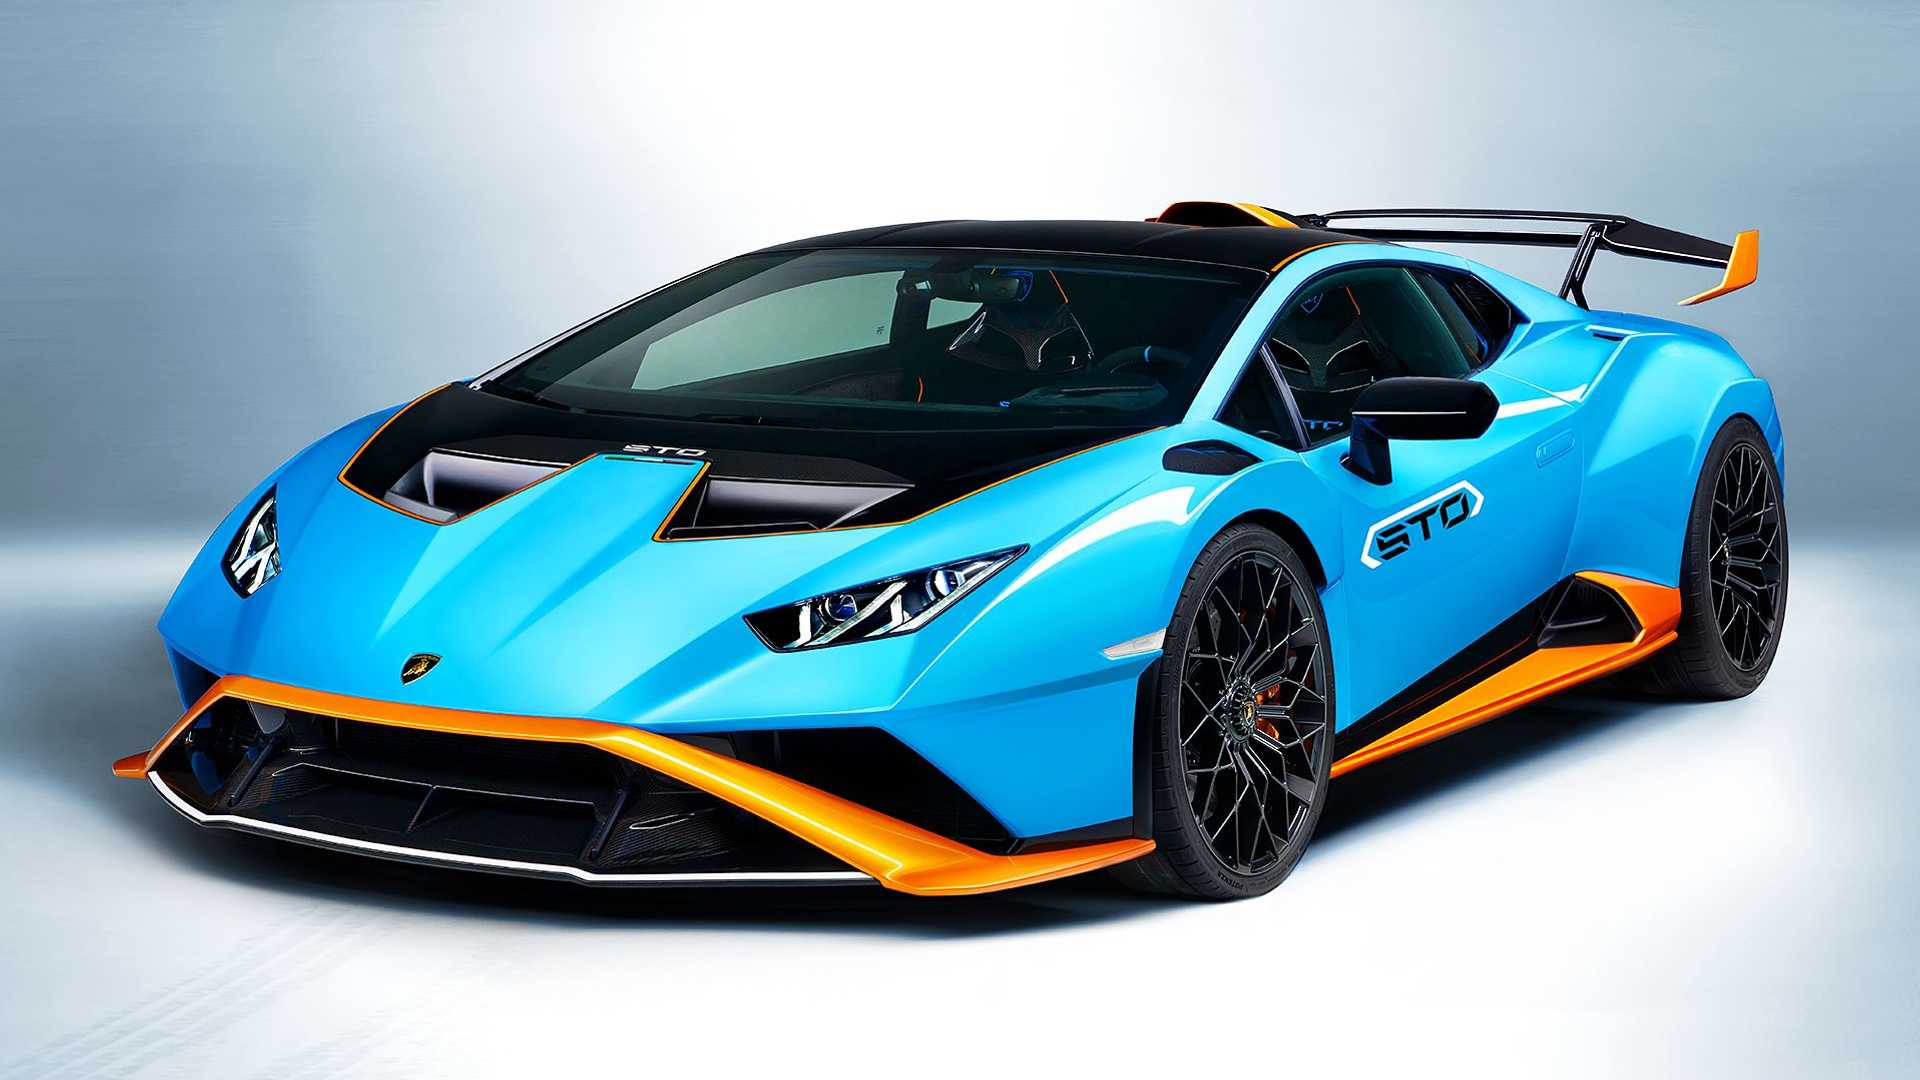 Lamborghini Huracan STO Revealed As $000 Race Car For The Road